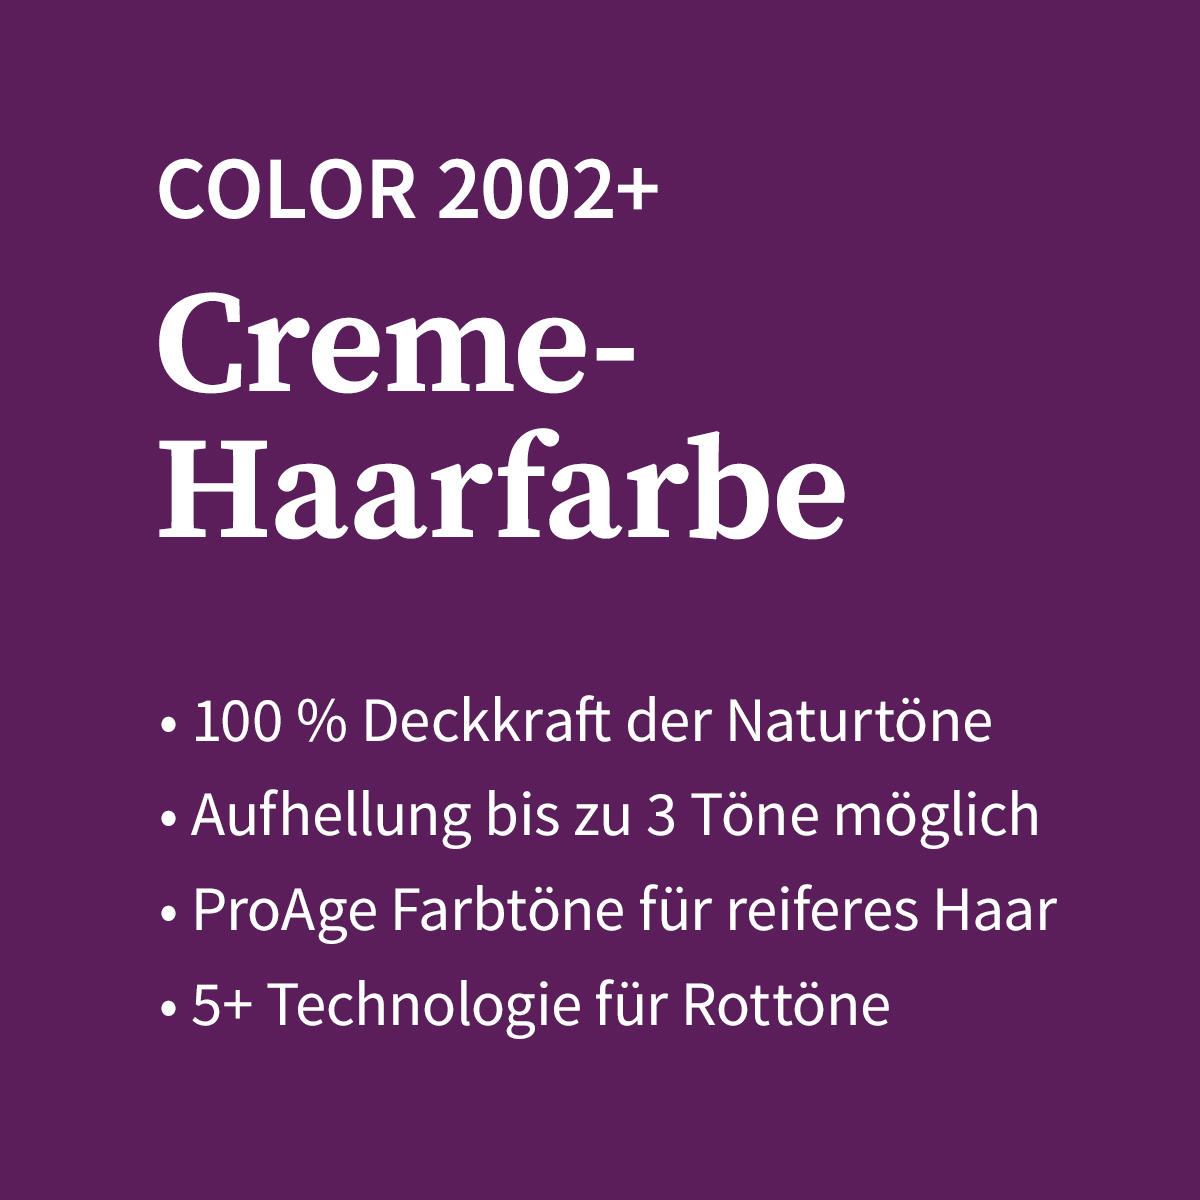 Basler Color 2002+ Cremehaarfarbe 5/46 hellbraun rot violett, Tube 60 ml - 4